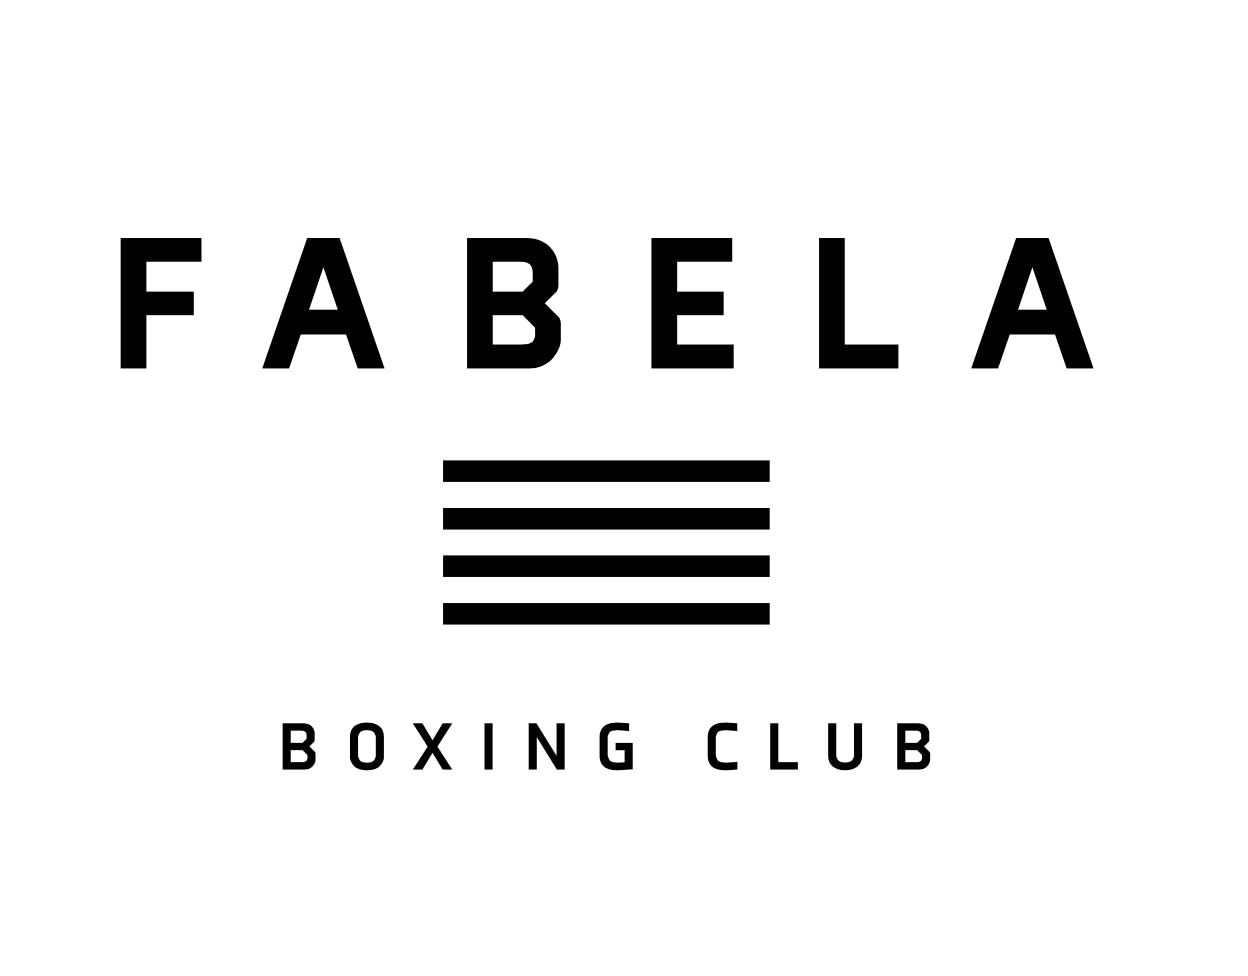 Club de Boxeo Fabela.